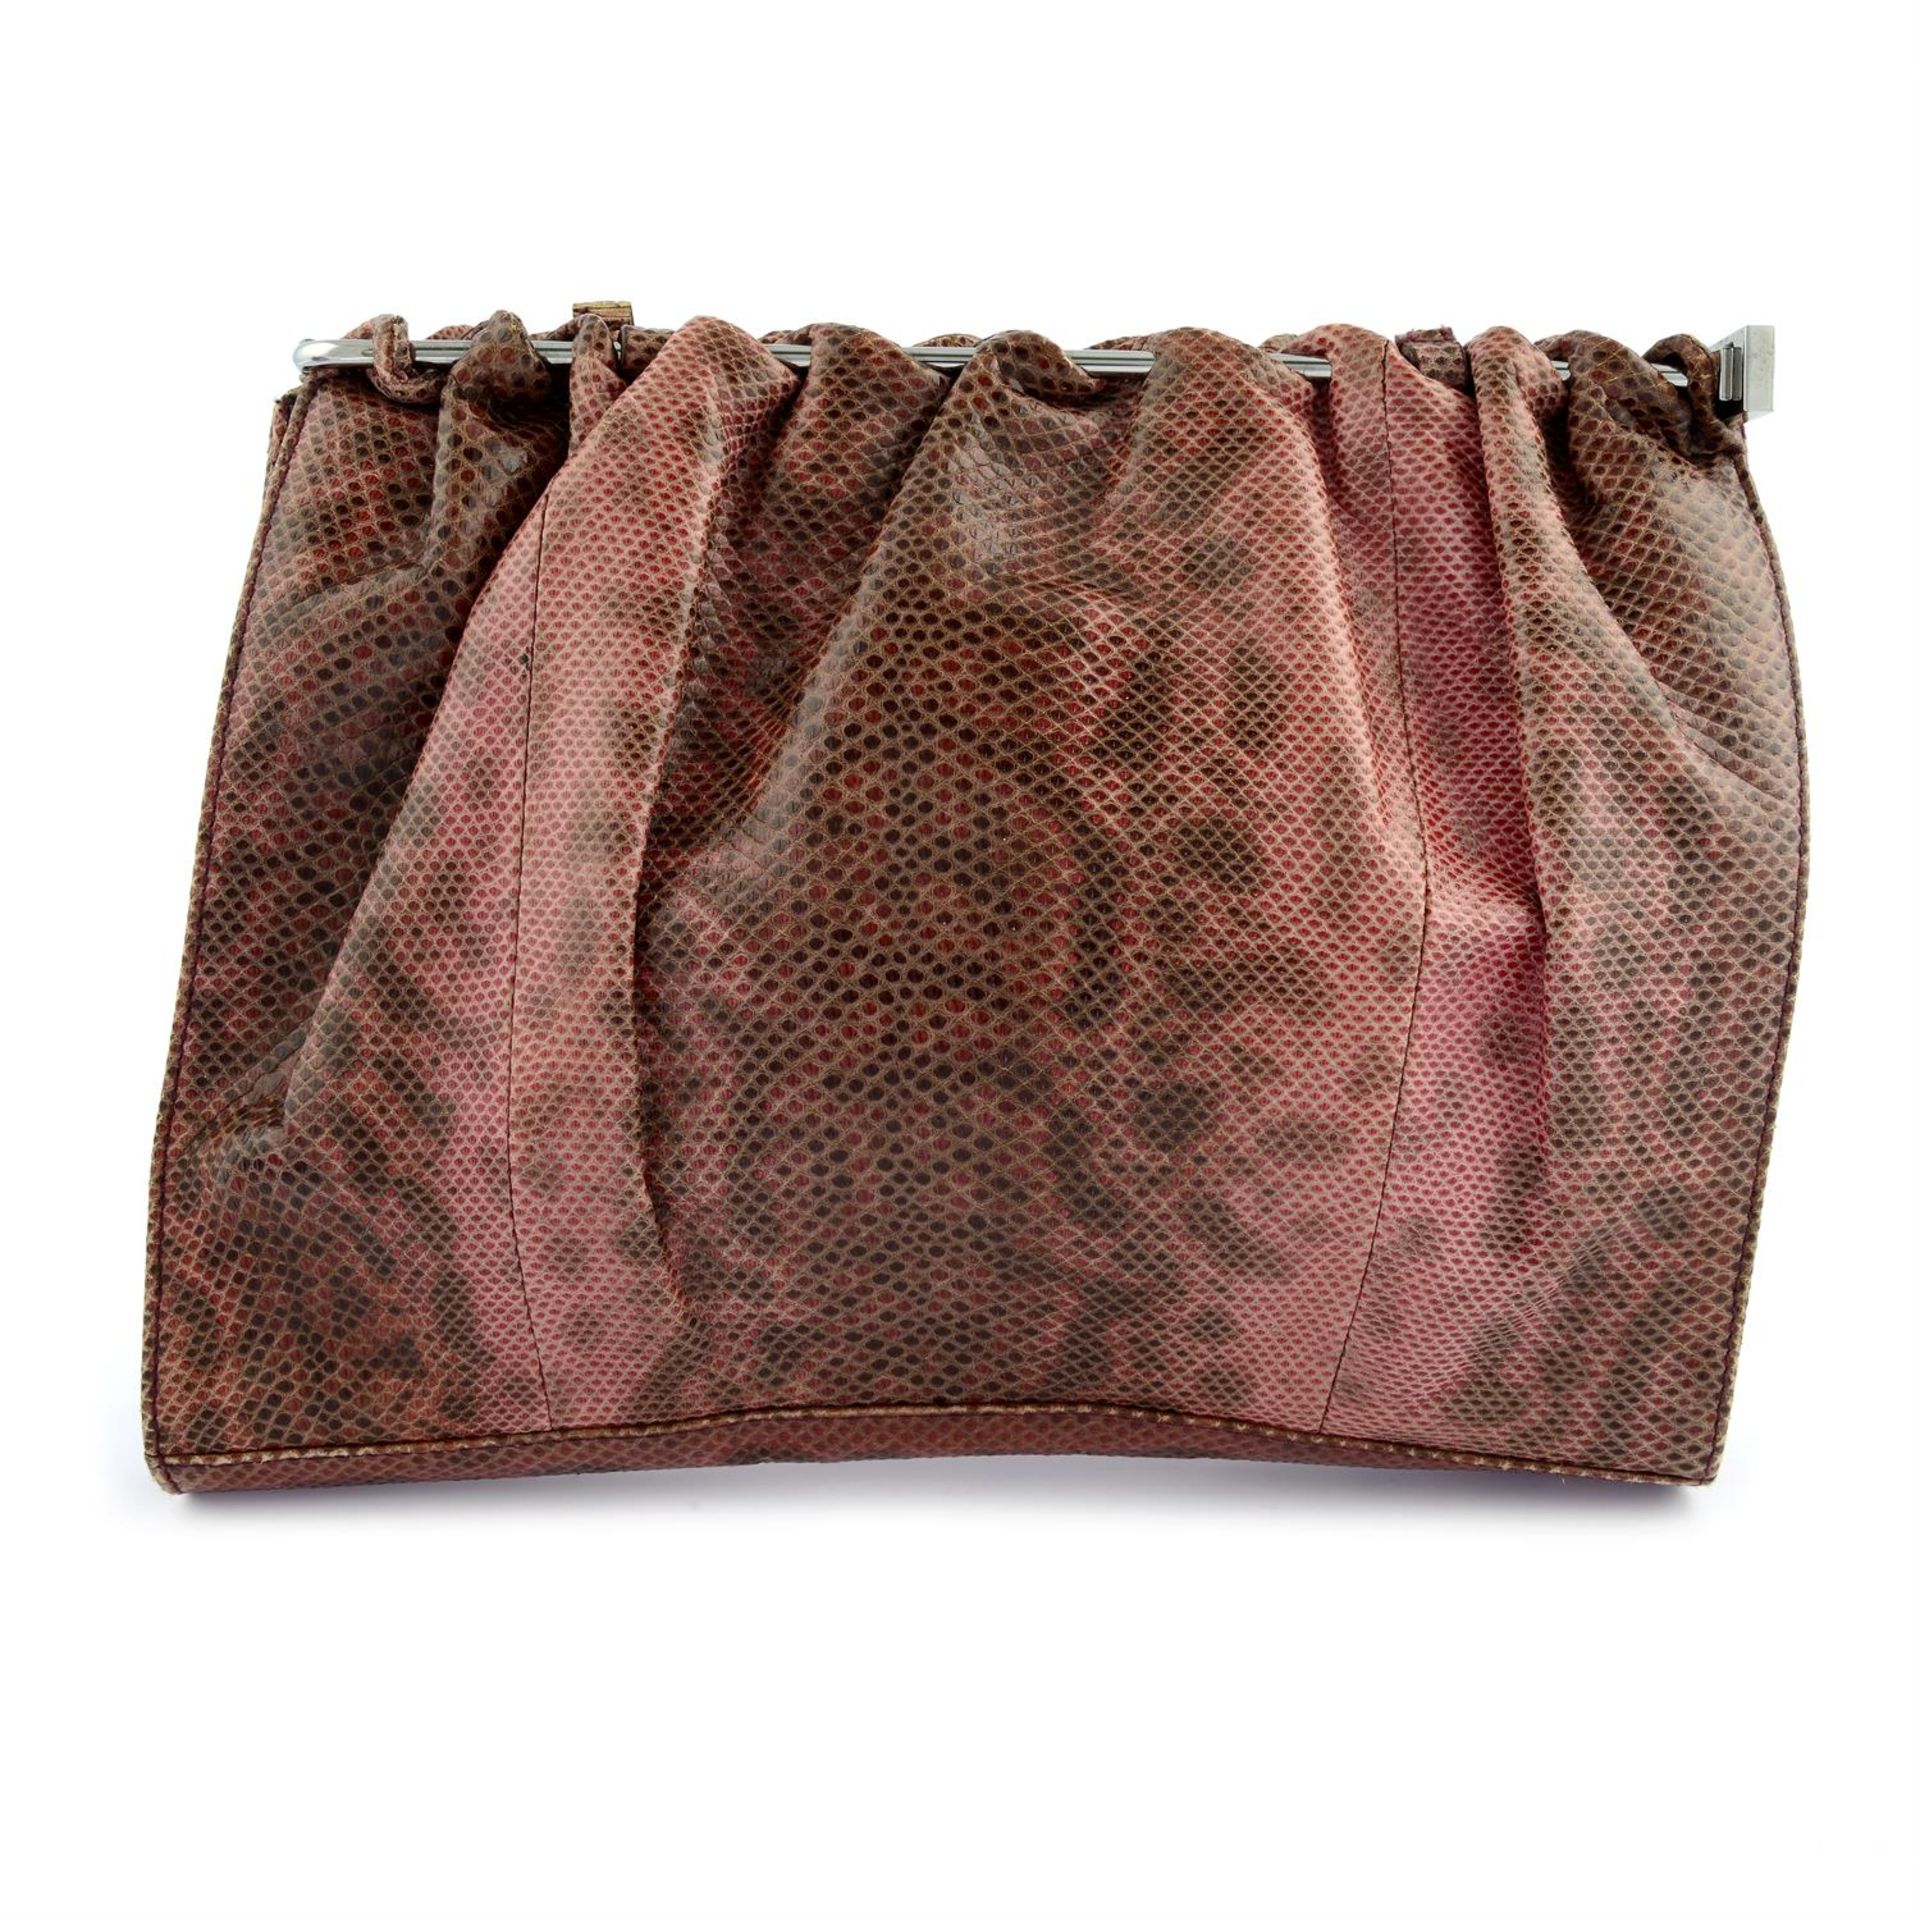 GUCCI - a pink snakeskin bag. - Image 2 of 5